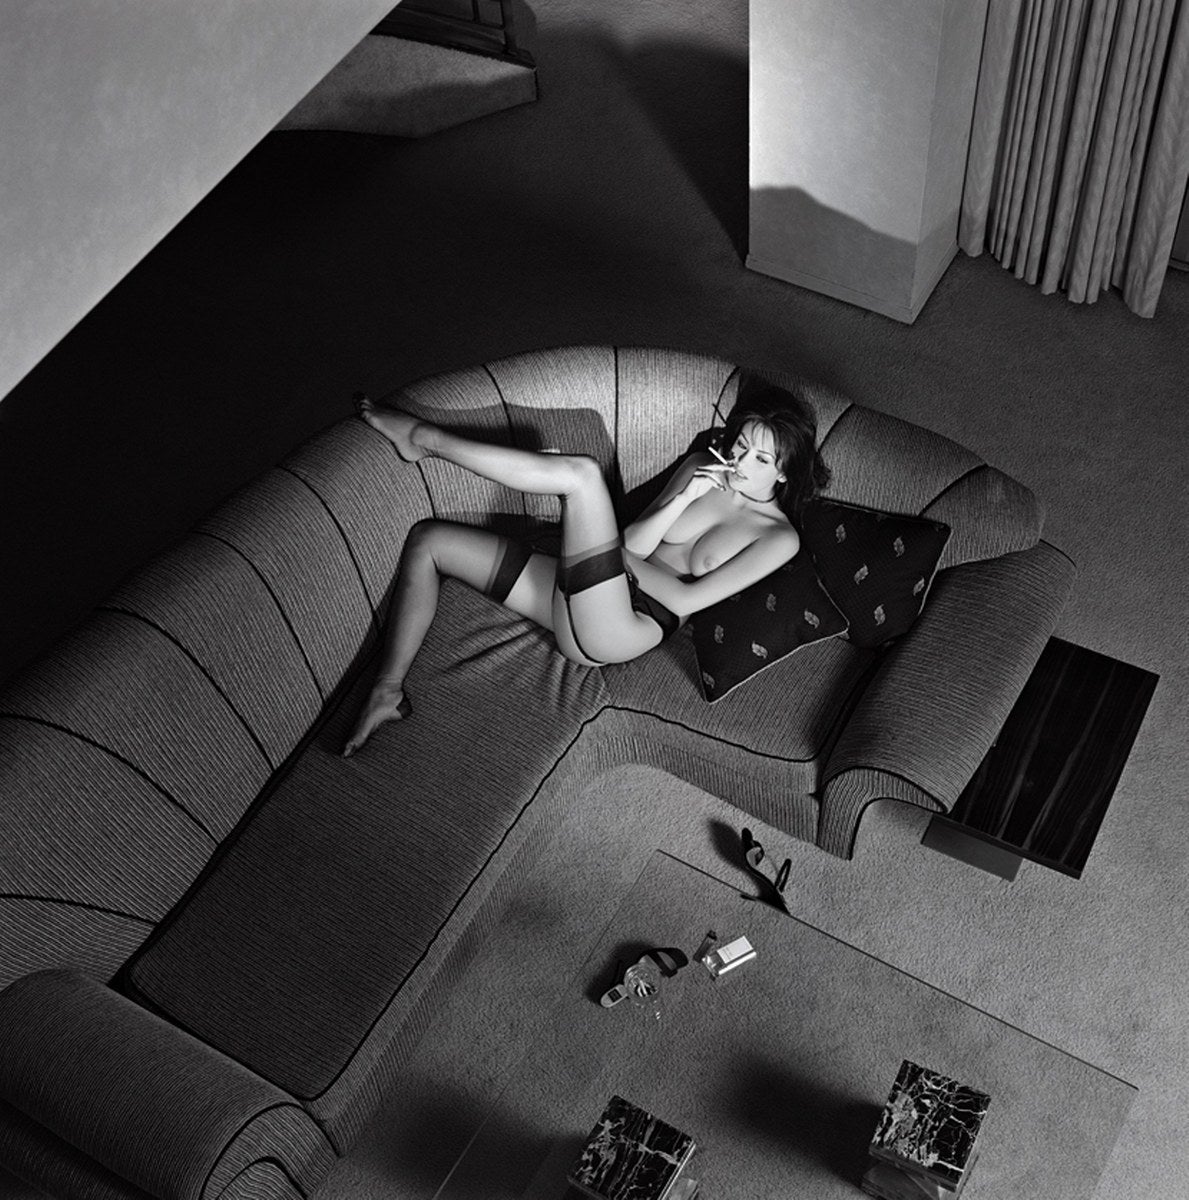 Guido Argentini Nude Photograph - Petra Smoking a Cigarette - Nude Woman on a Sofa, Fine Art Photography, 2012